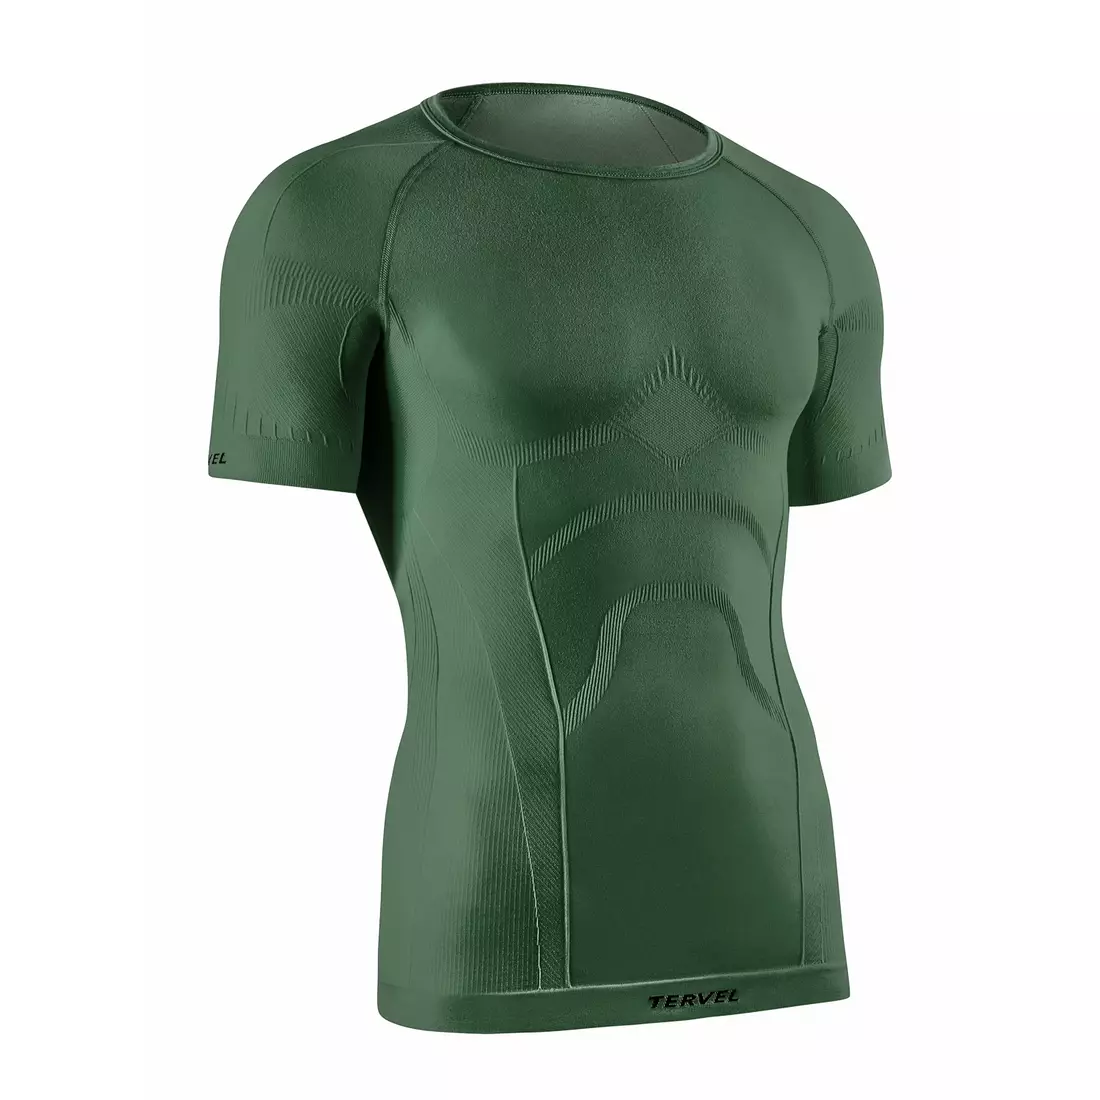 TERVEL COMFORTLINE 1102 - Herren-Thermo-T-Shirt, Kurzarm, Farbe: Military (grün)